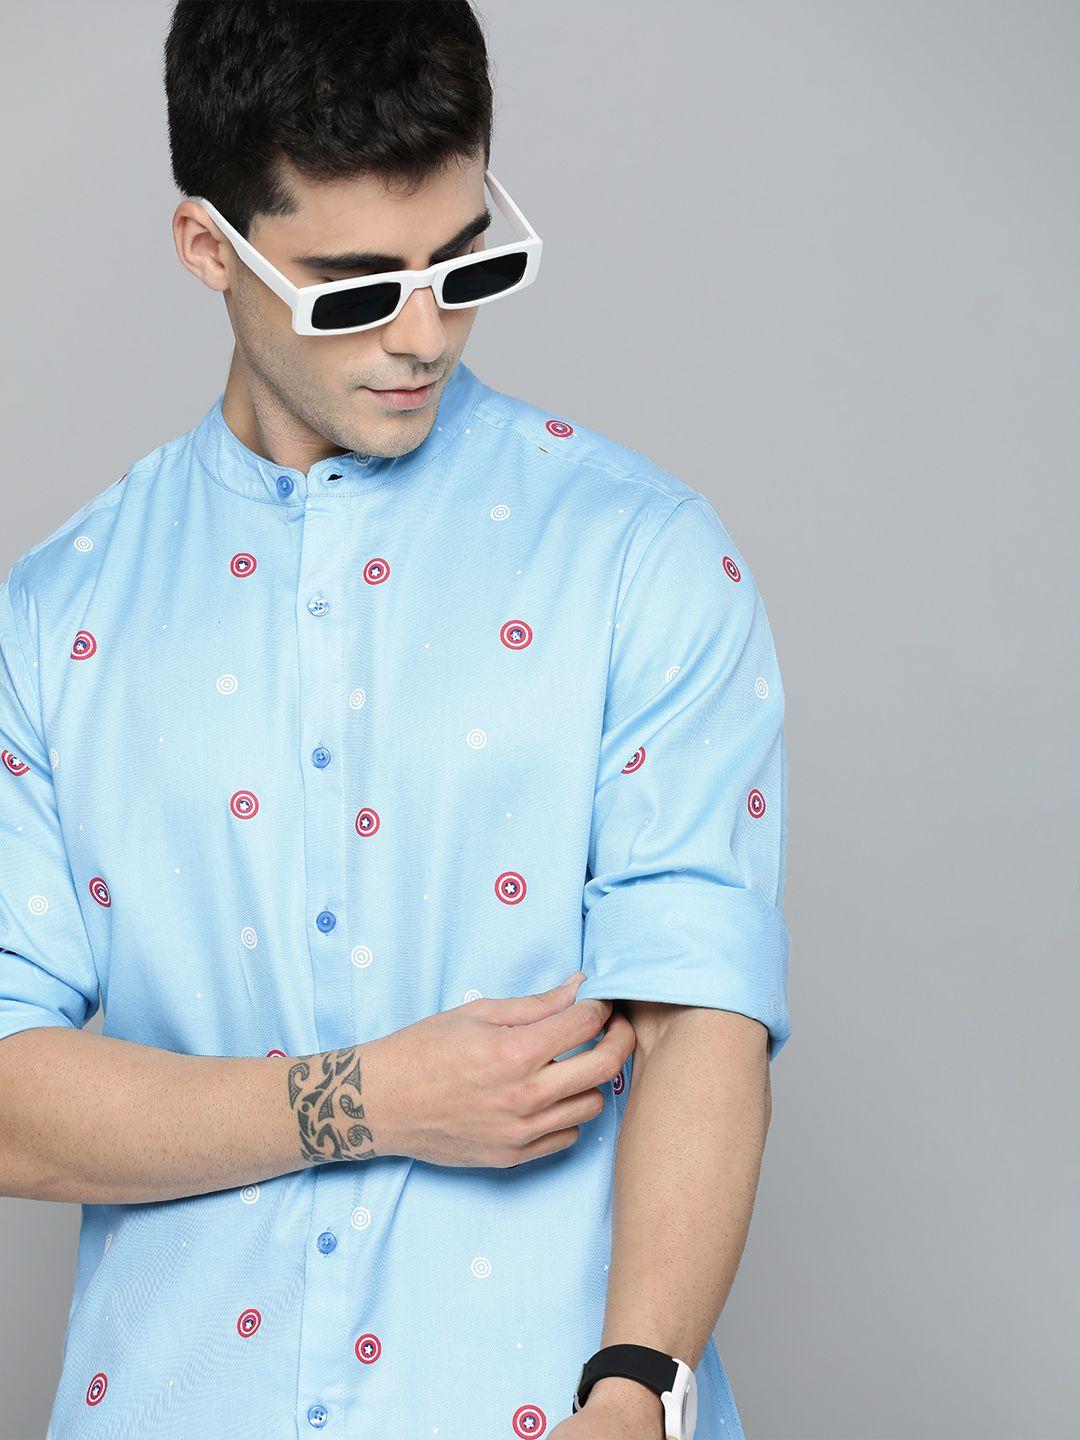 kook n keech marvel men turquoise blue printed pure cotton casual shirt